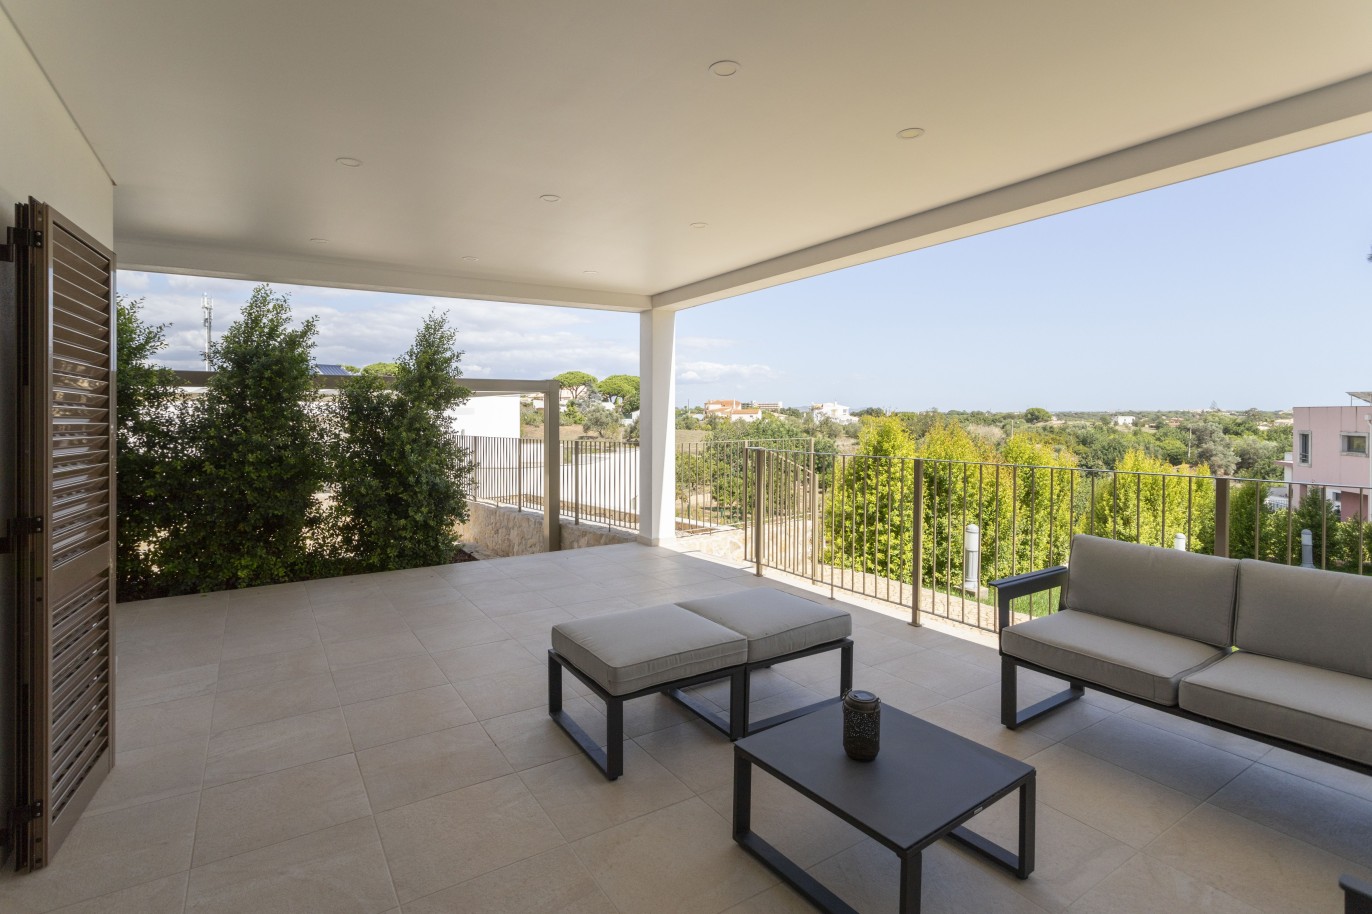 5 bedroom villa with pool, new build, for sale in Albufeira, Algarve_238348